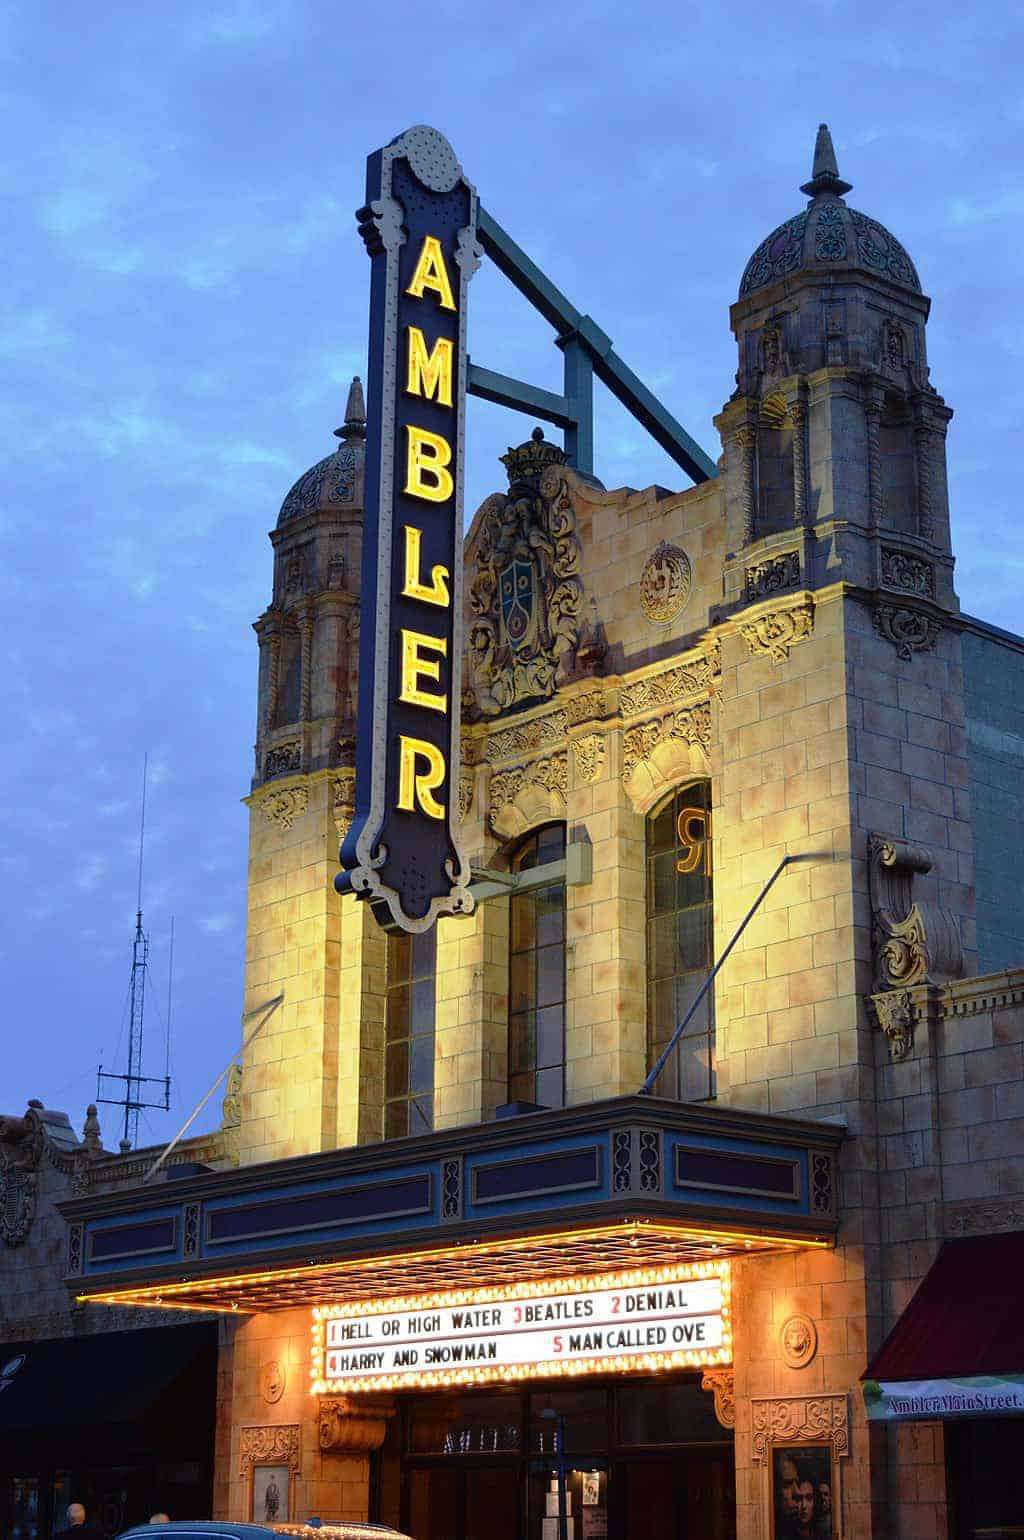 ambler movie theatre - independent movie theatre near philly area